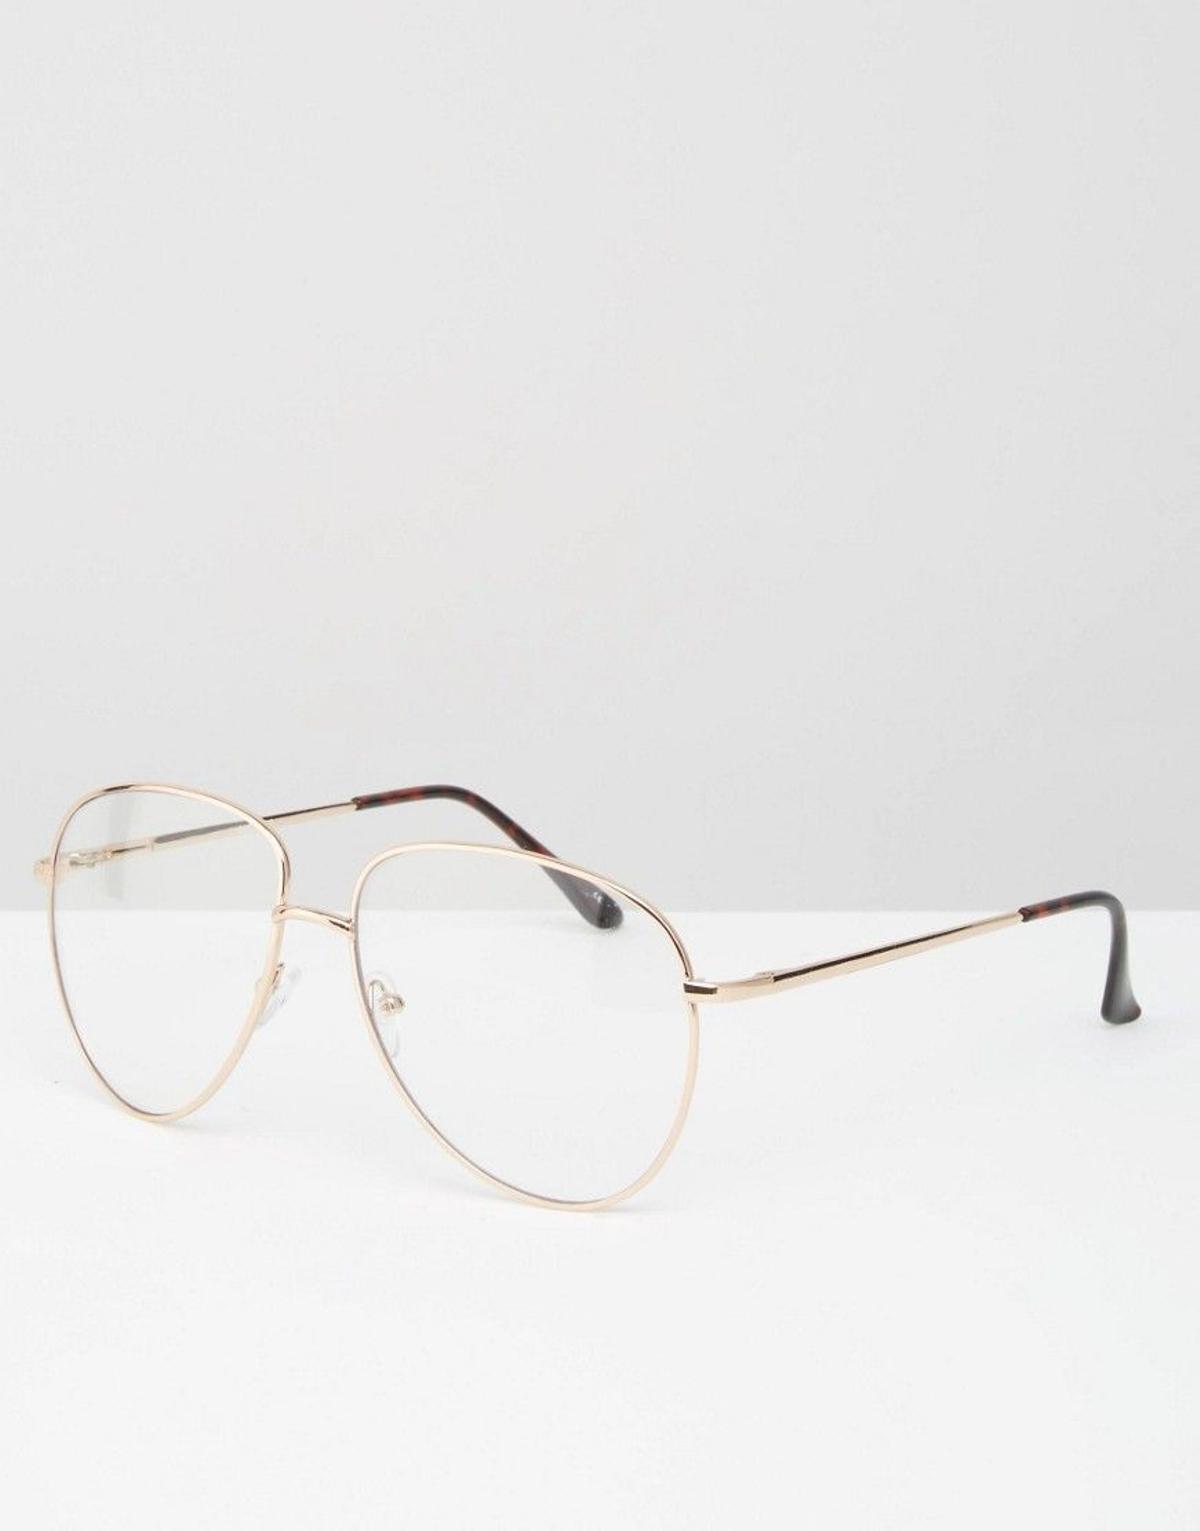 Las gafas 'nerd': Asos